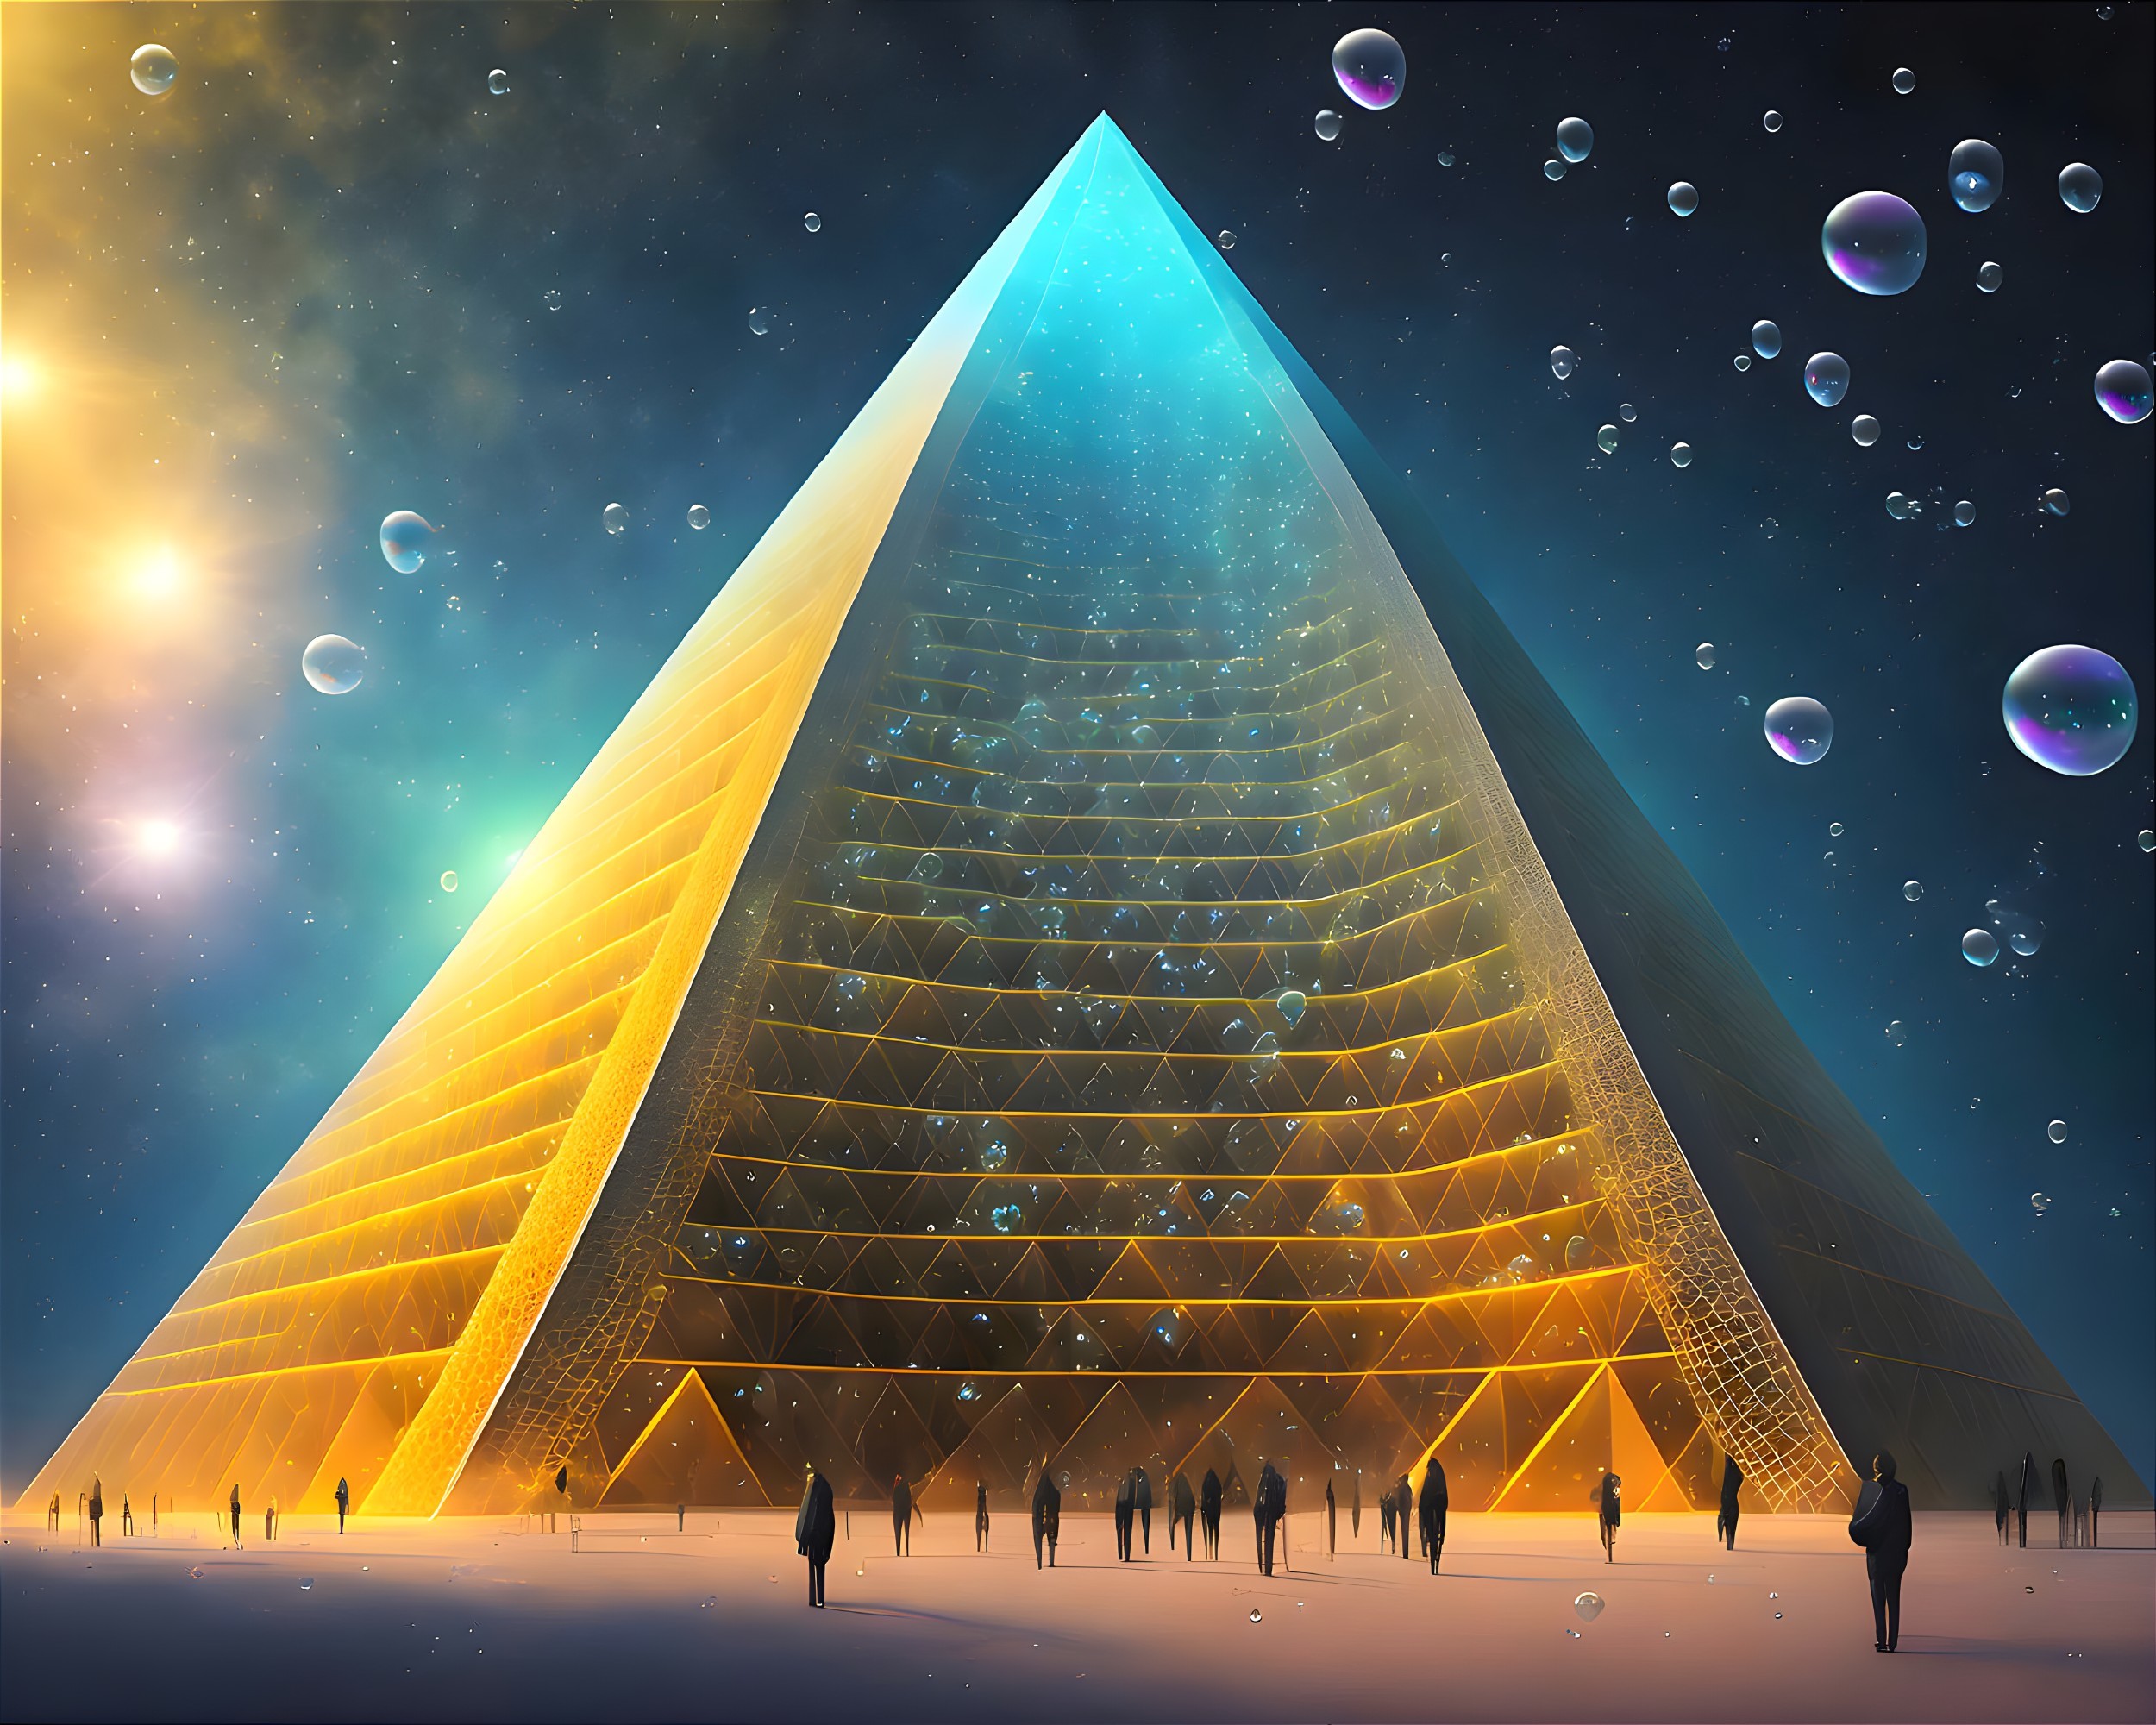 Human souls flying through the soc.pyramid